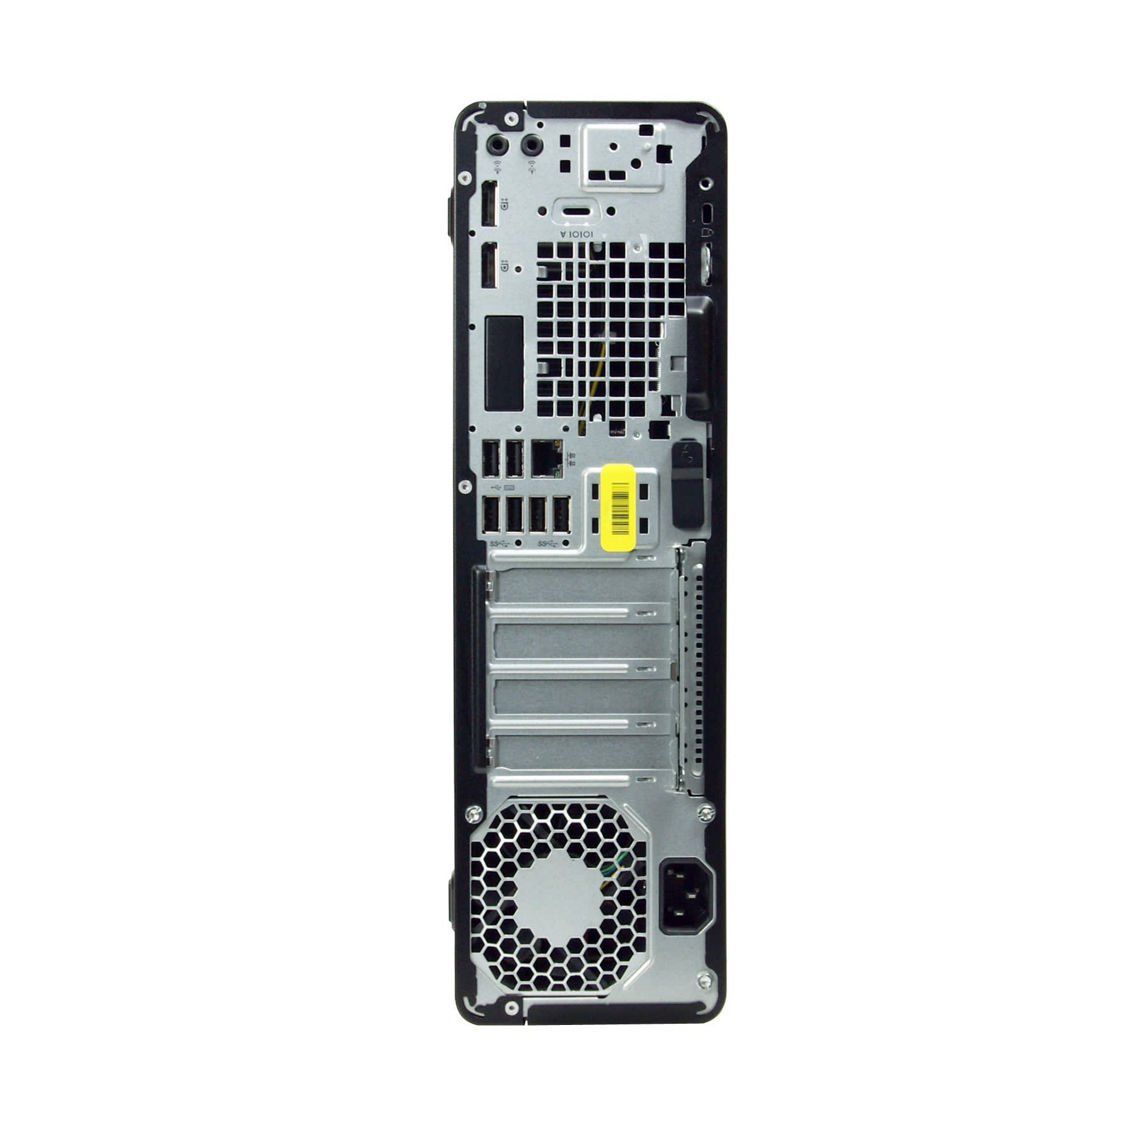 HP 800 G3-SFF Core i7-6700 3.4GHz 16GB 256GB SSD PC (Refurbished) - Image 3 of 3